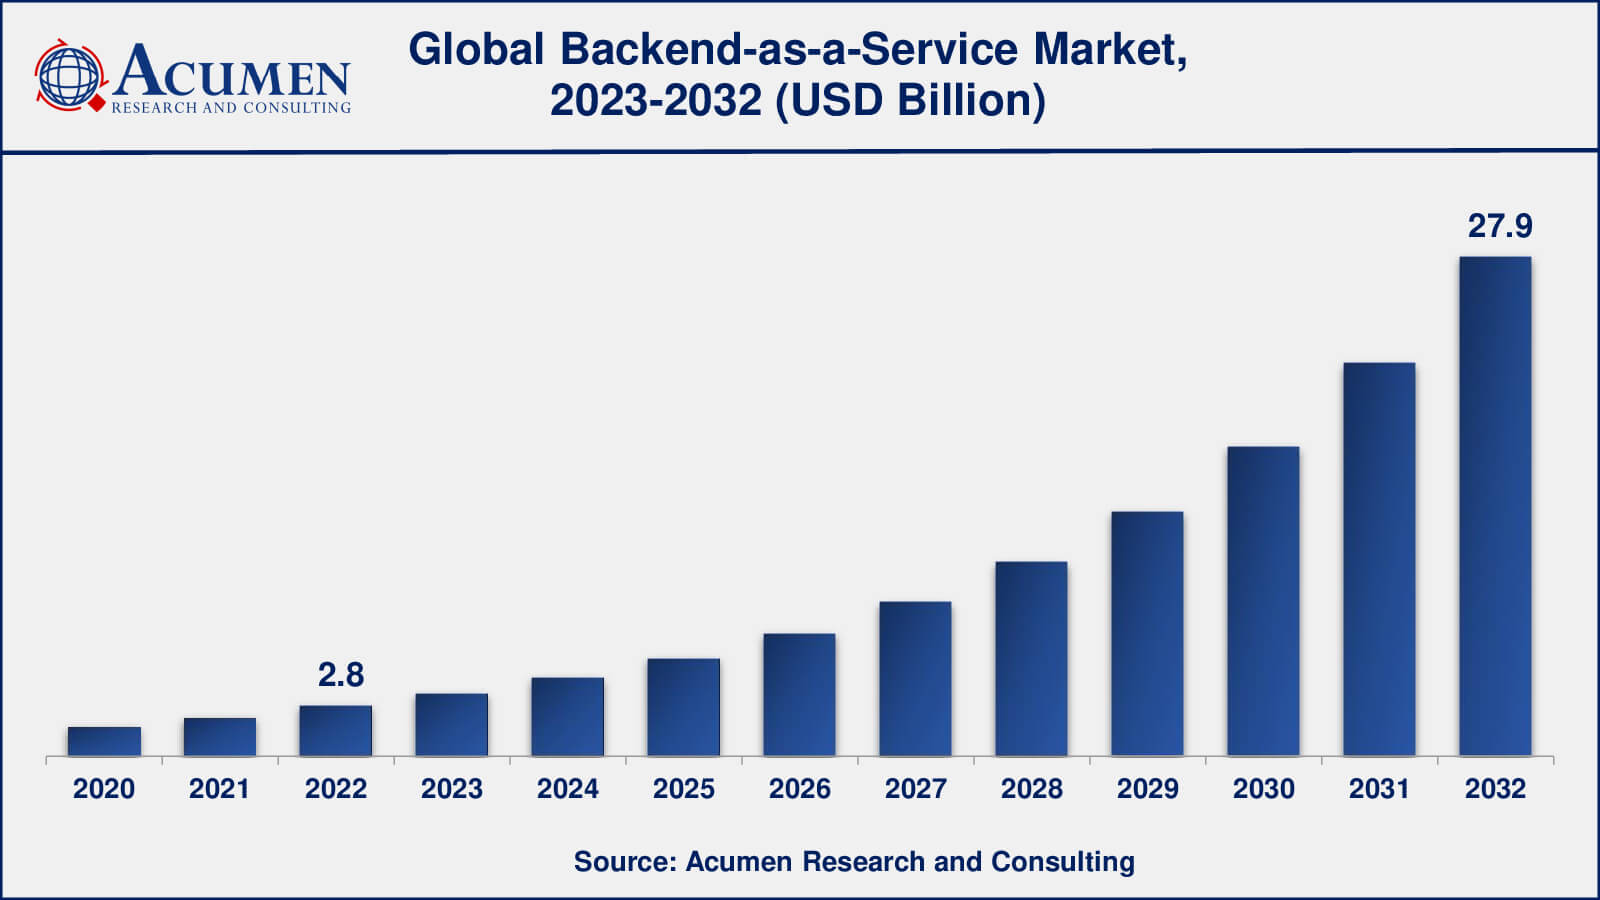 Global Backend-as-a-Service (BaaS) Market Dynamics